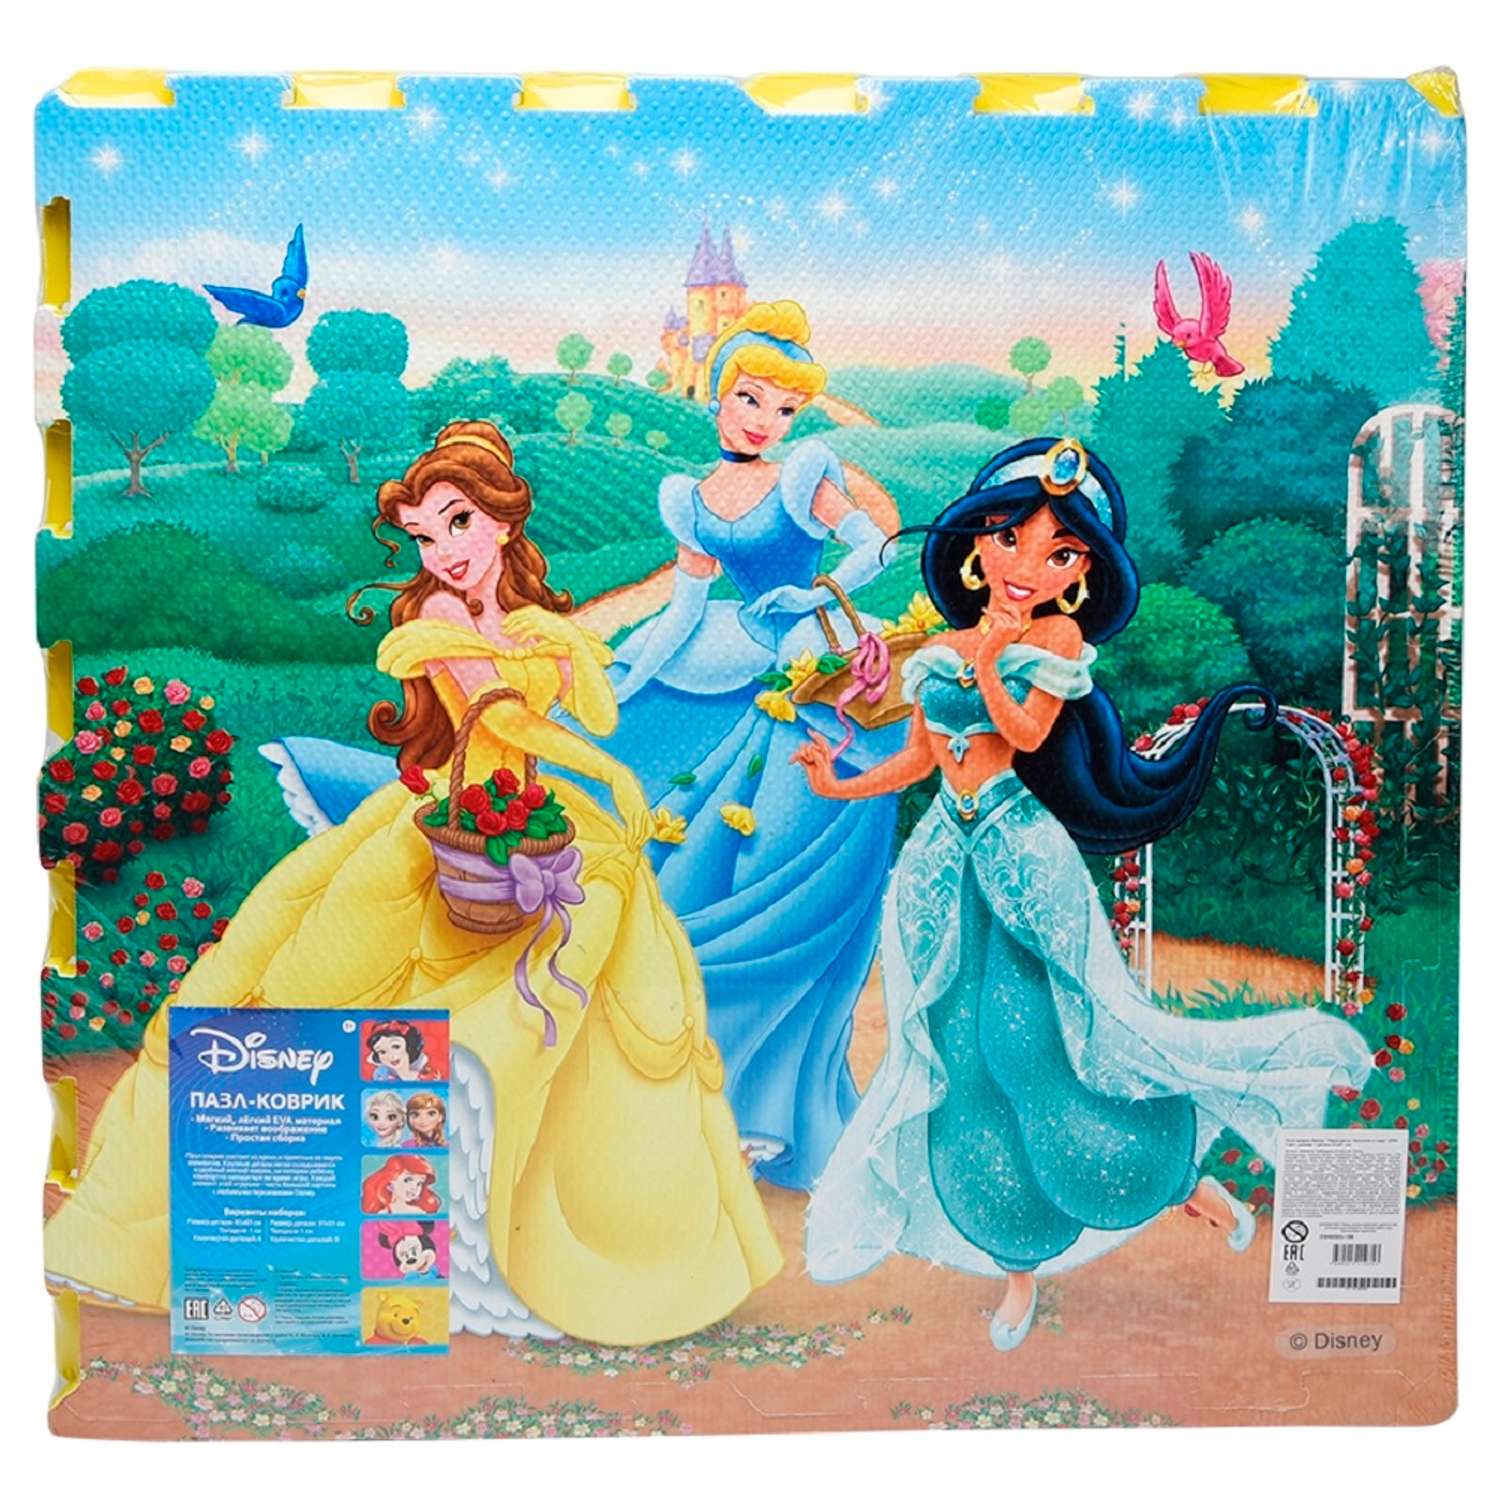 Пазл-коврик Disney Принцесса Прогулка в саду - фото 2